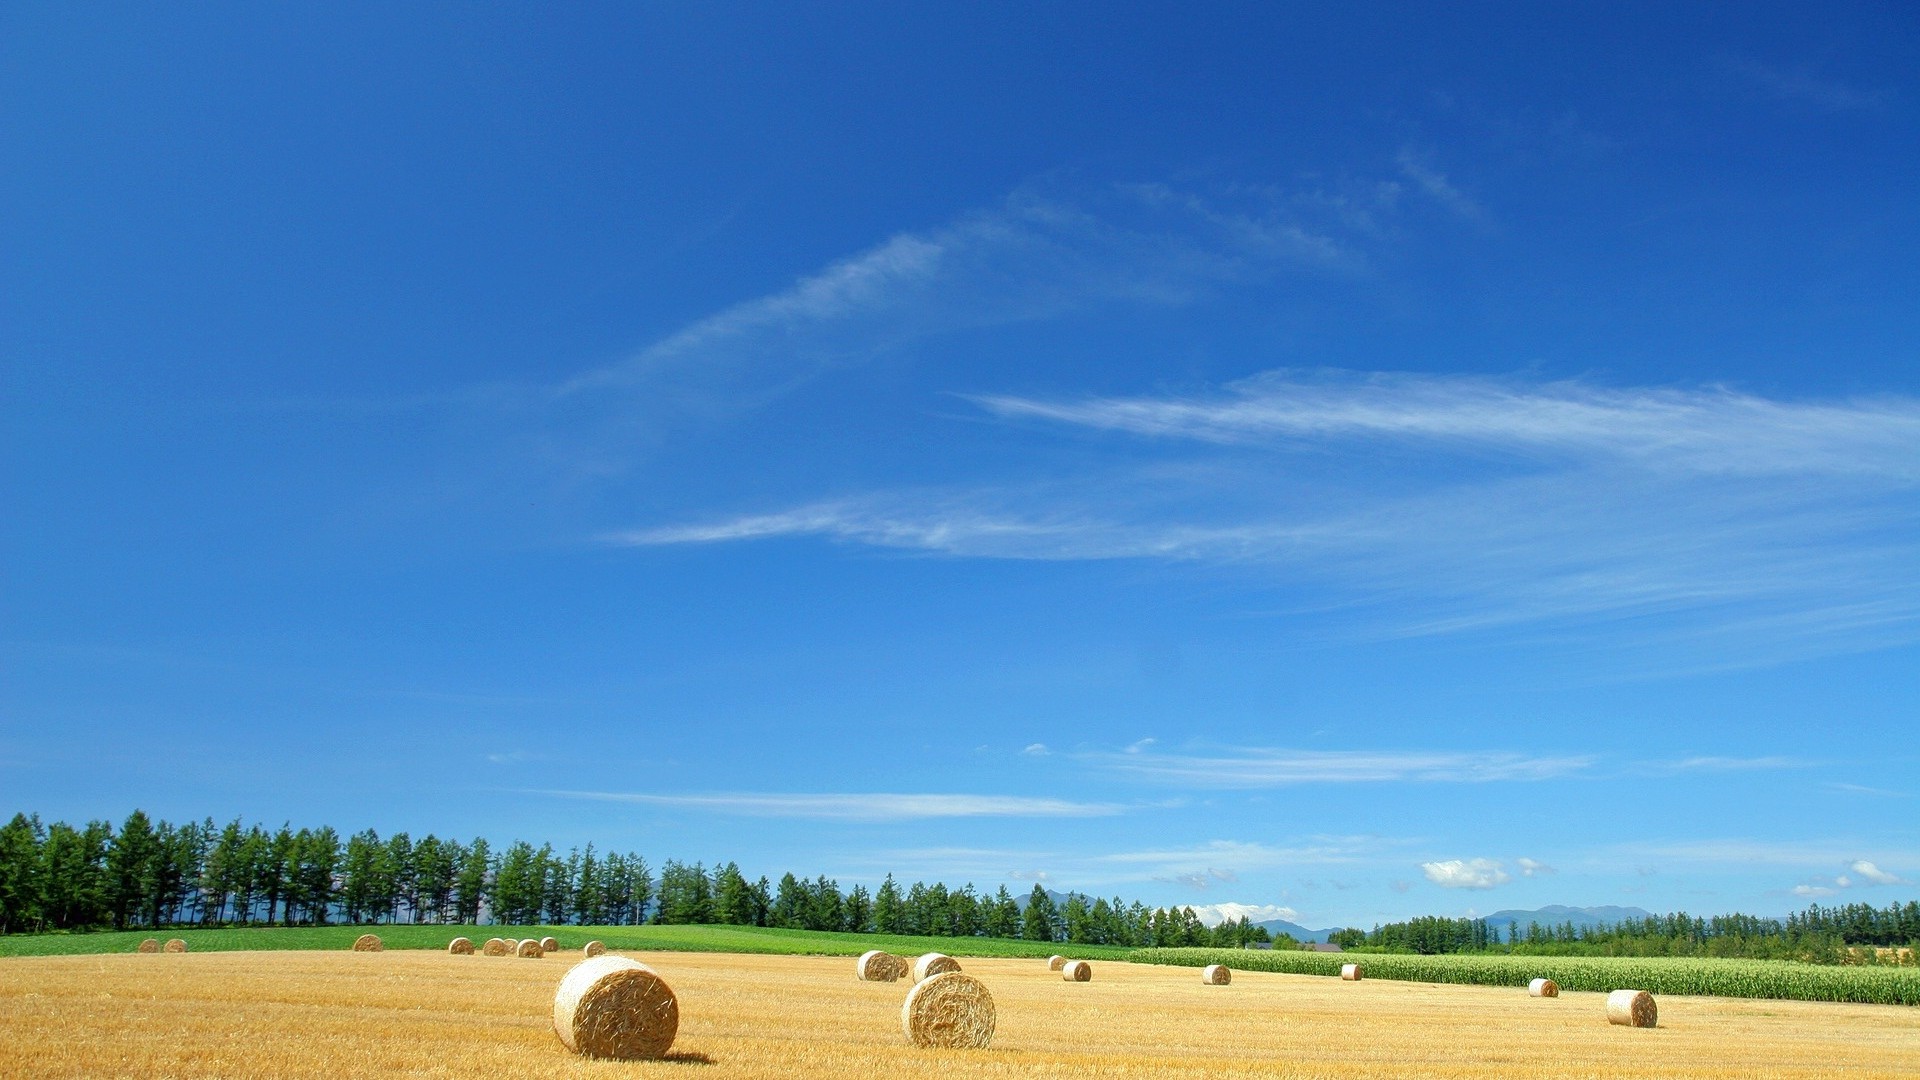 1920x1080 wallpapers: field, farm, hay, straw, summer (image)